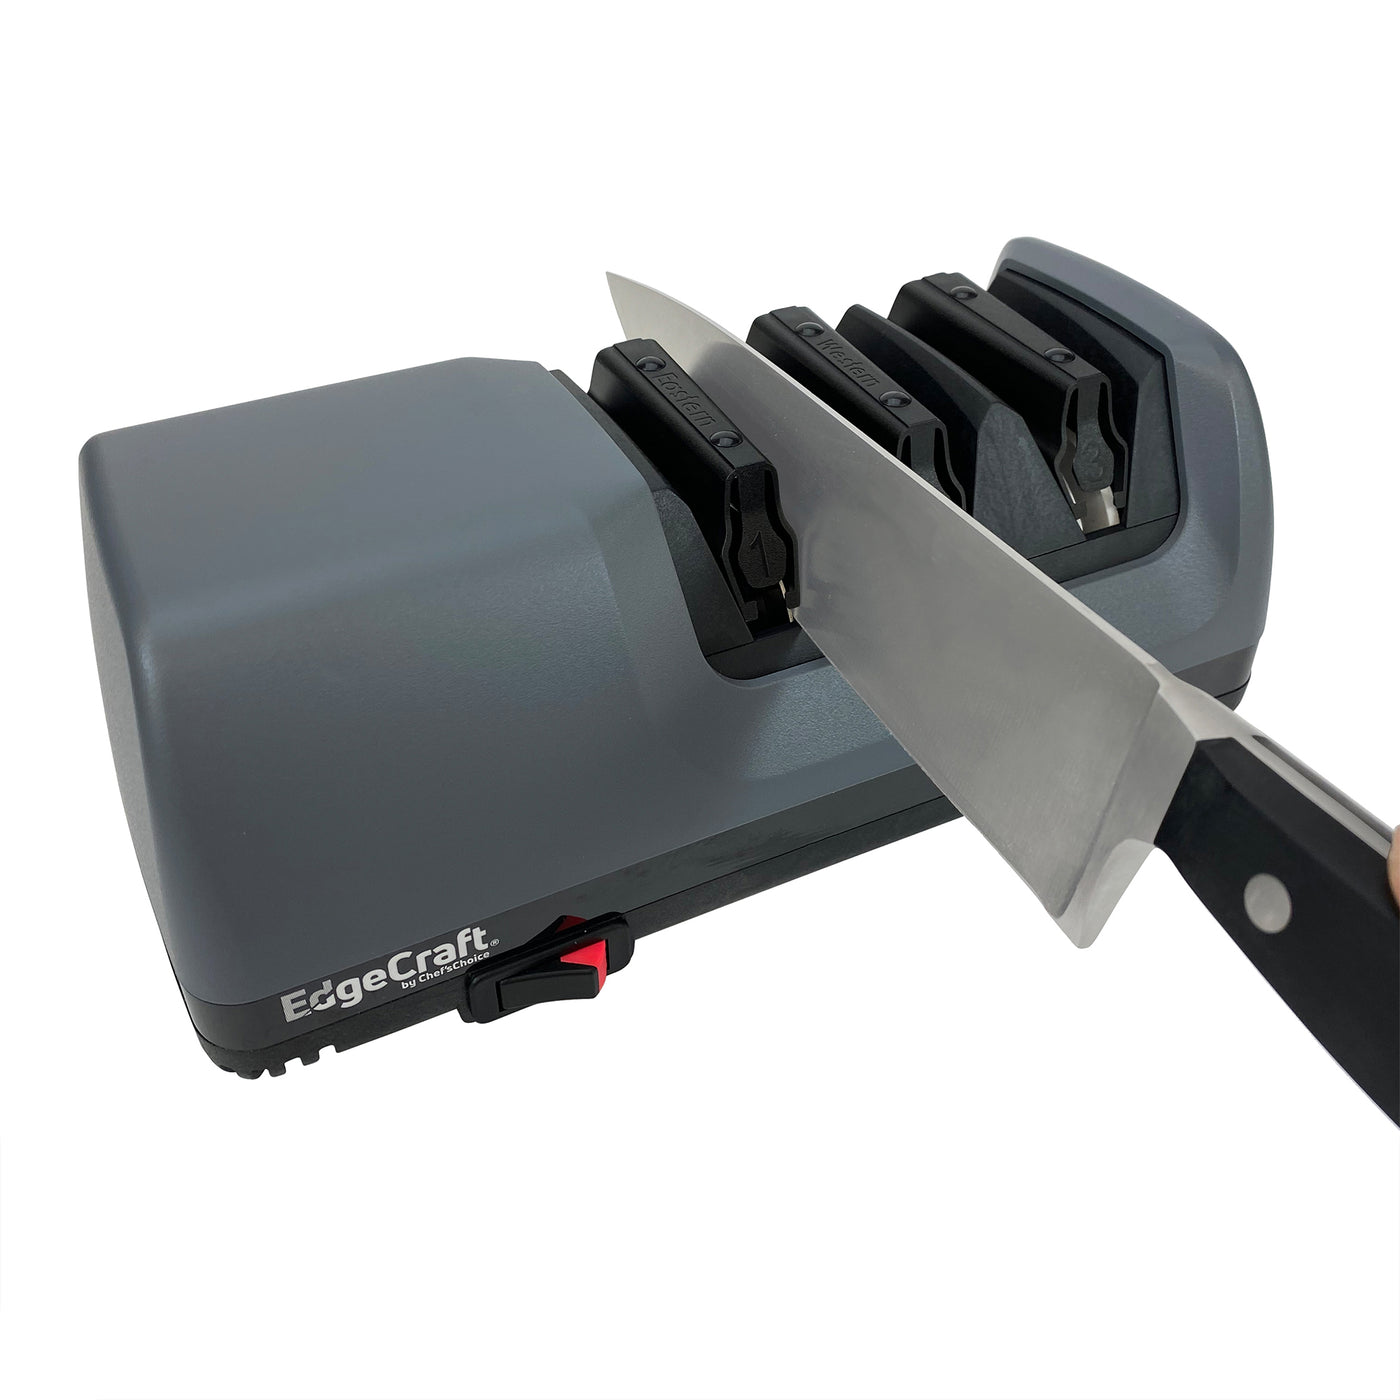 Xiaomi Electric Knife Sharpener, Kitchen Knife Sharpener Machine